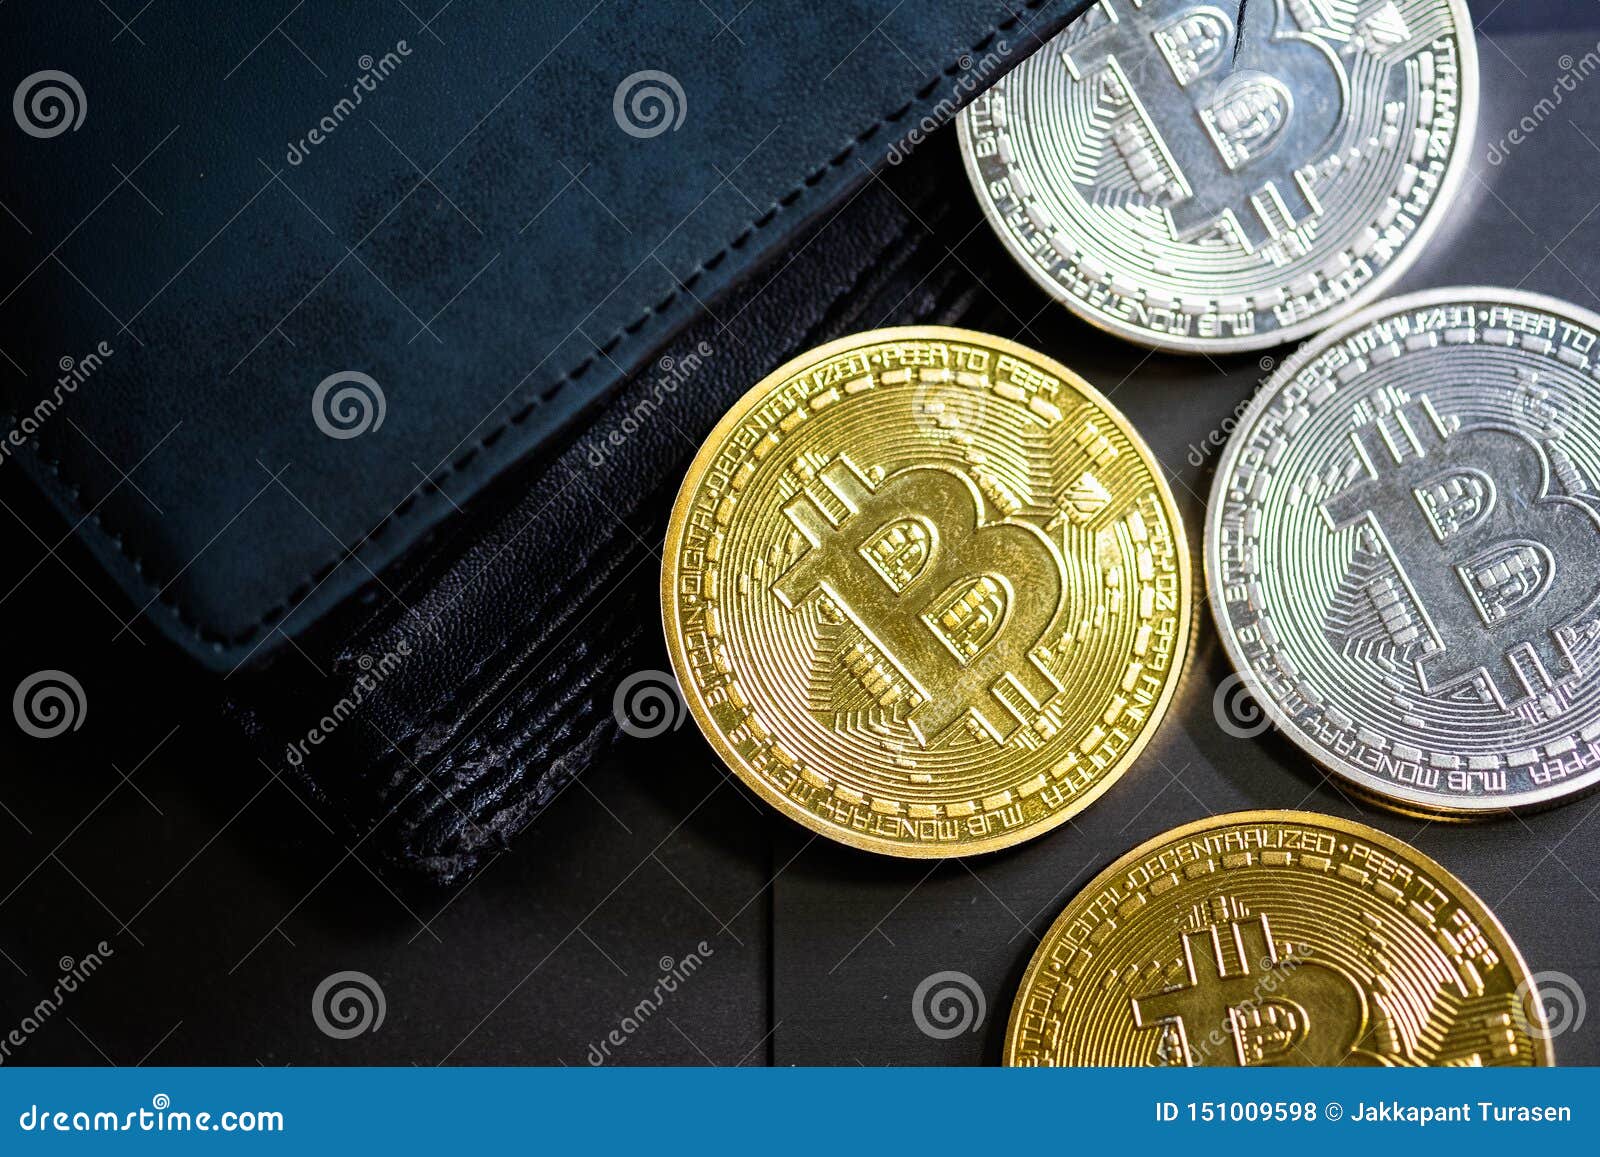 walletbit bitcoins mining